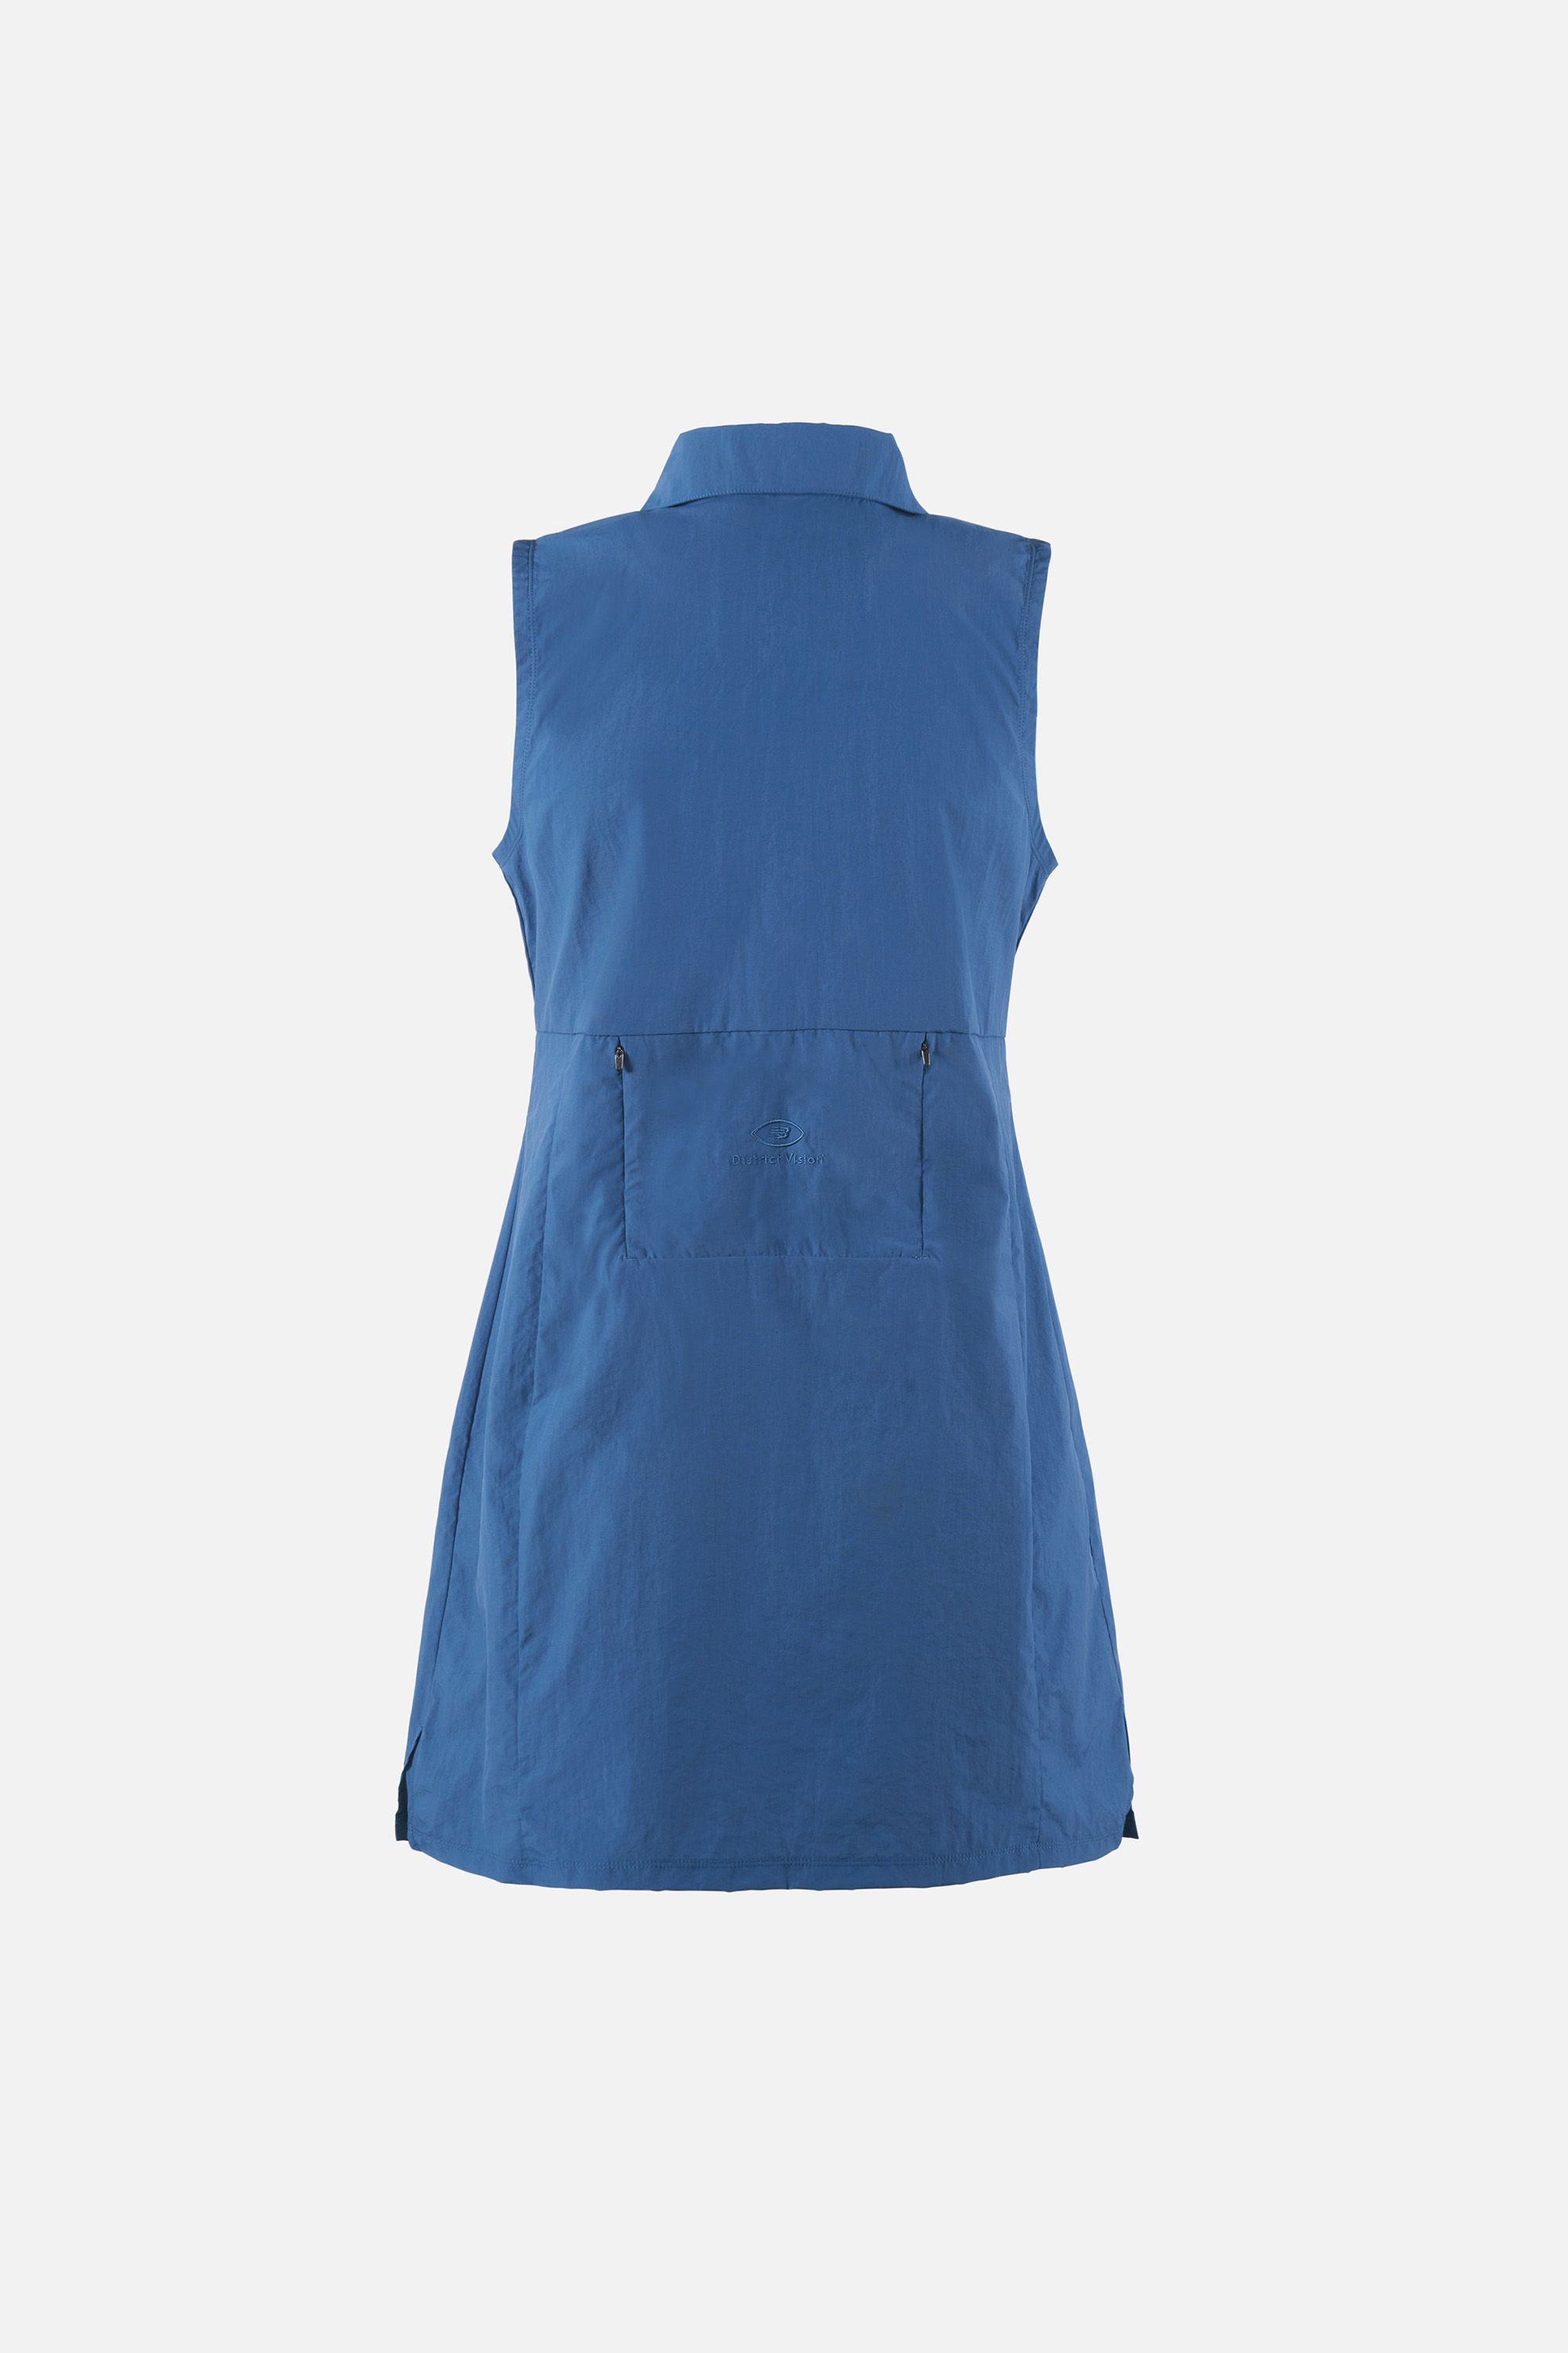 DV + NB DWR Zippered Dress, Vintage Blue